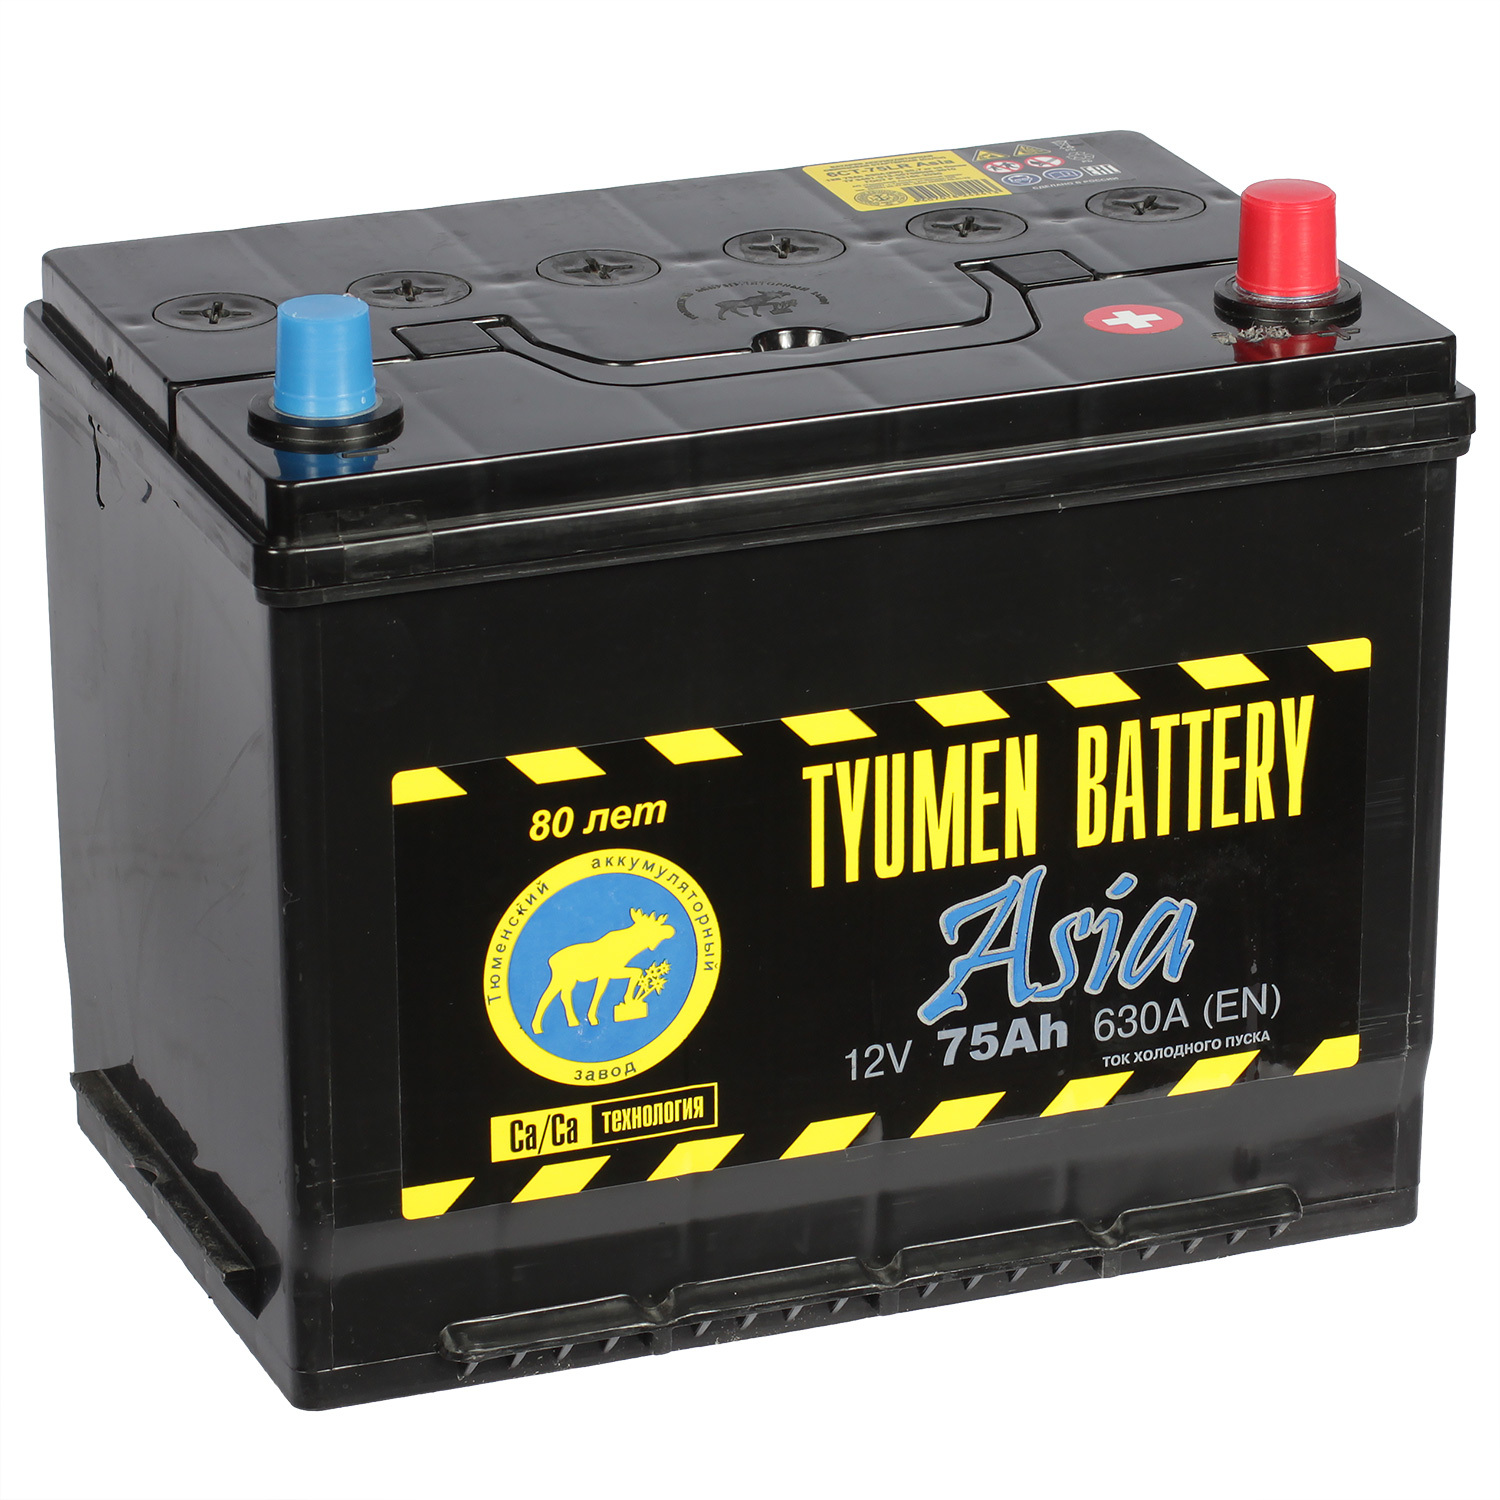 Tyumen Battery Автомобильный аккумулятор Tyumen Battery Asia 75 Ач обратная полярность D26L tyumen batbear автомобильный аккумулятор tyumen batbear 55 ач обратная полярность l1